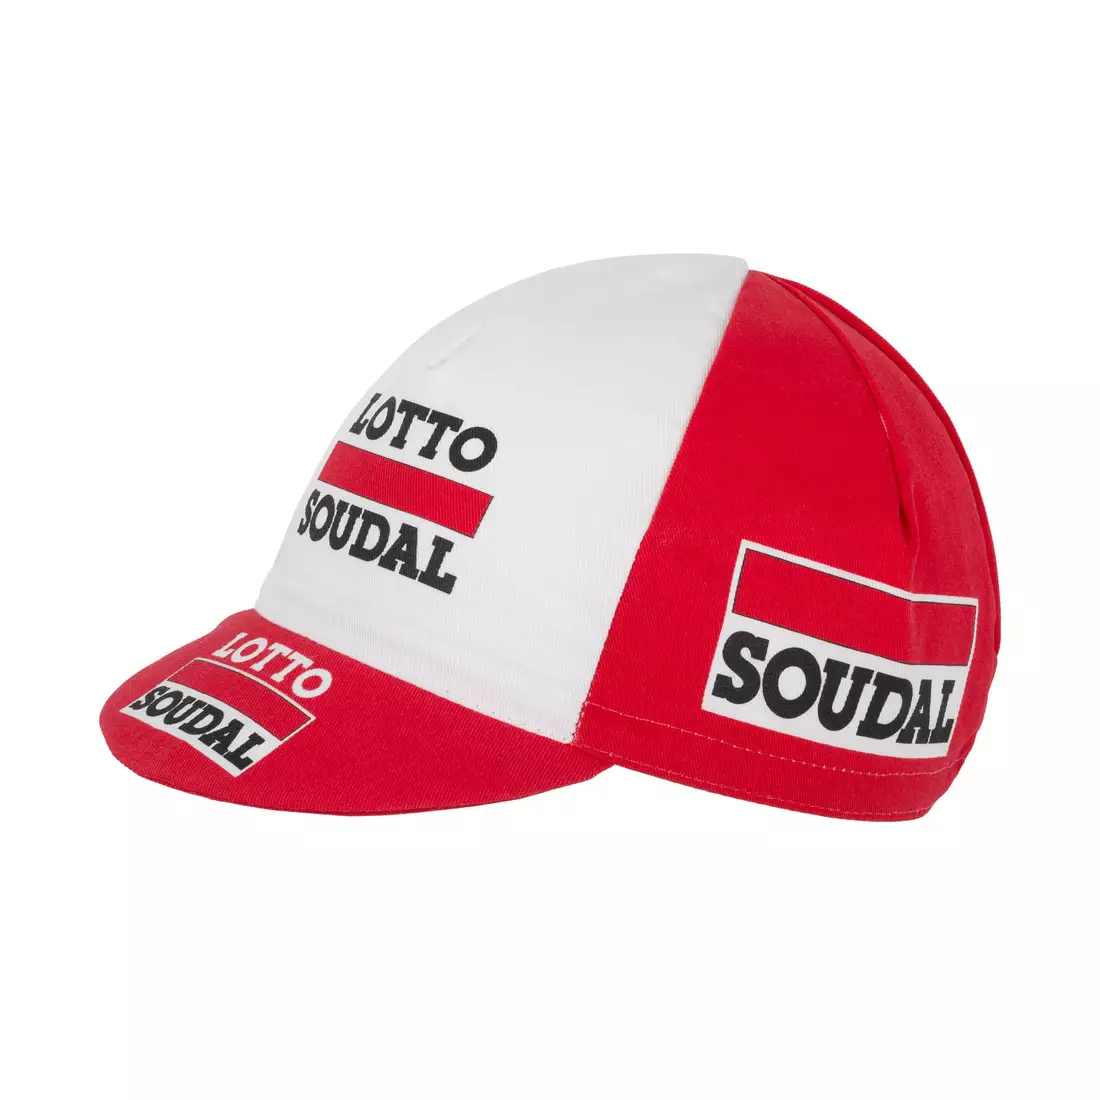 Apis Profi LOTTO SOUDAL cycling cap, red